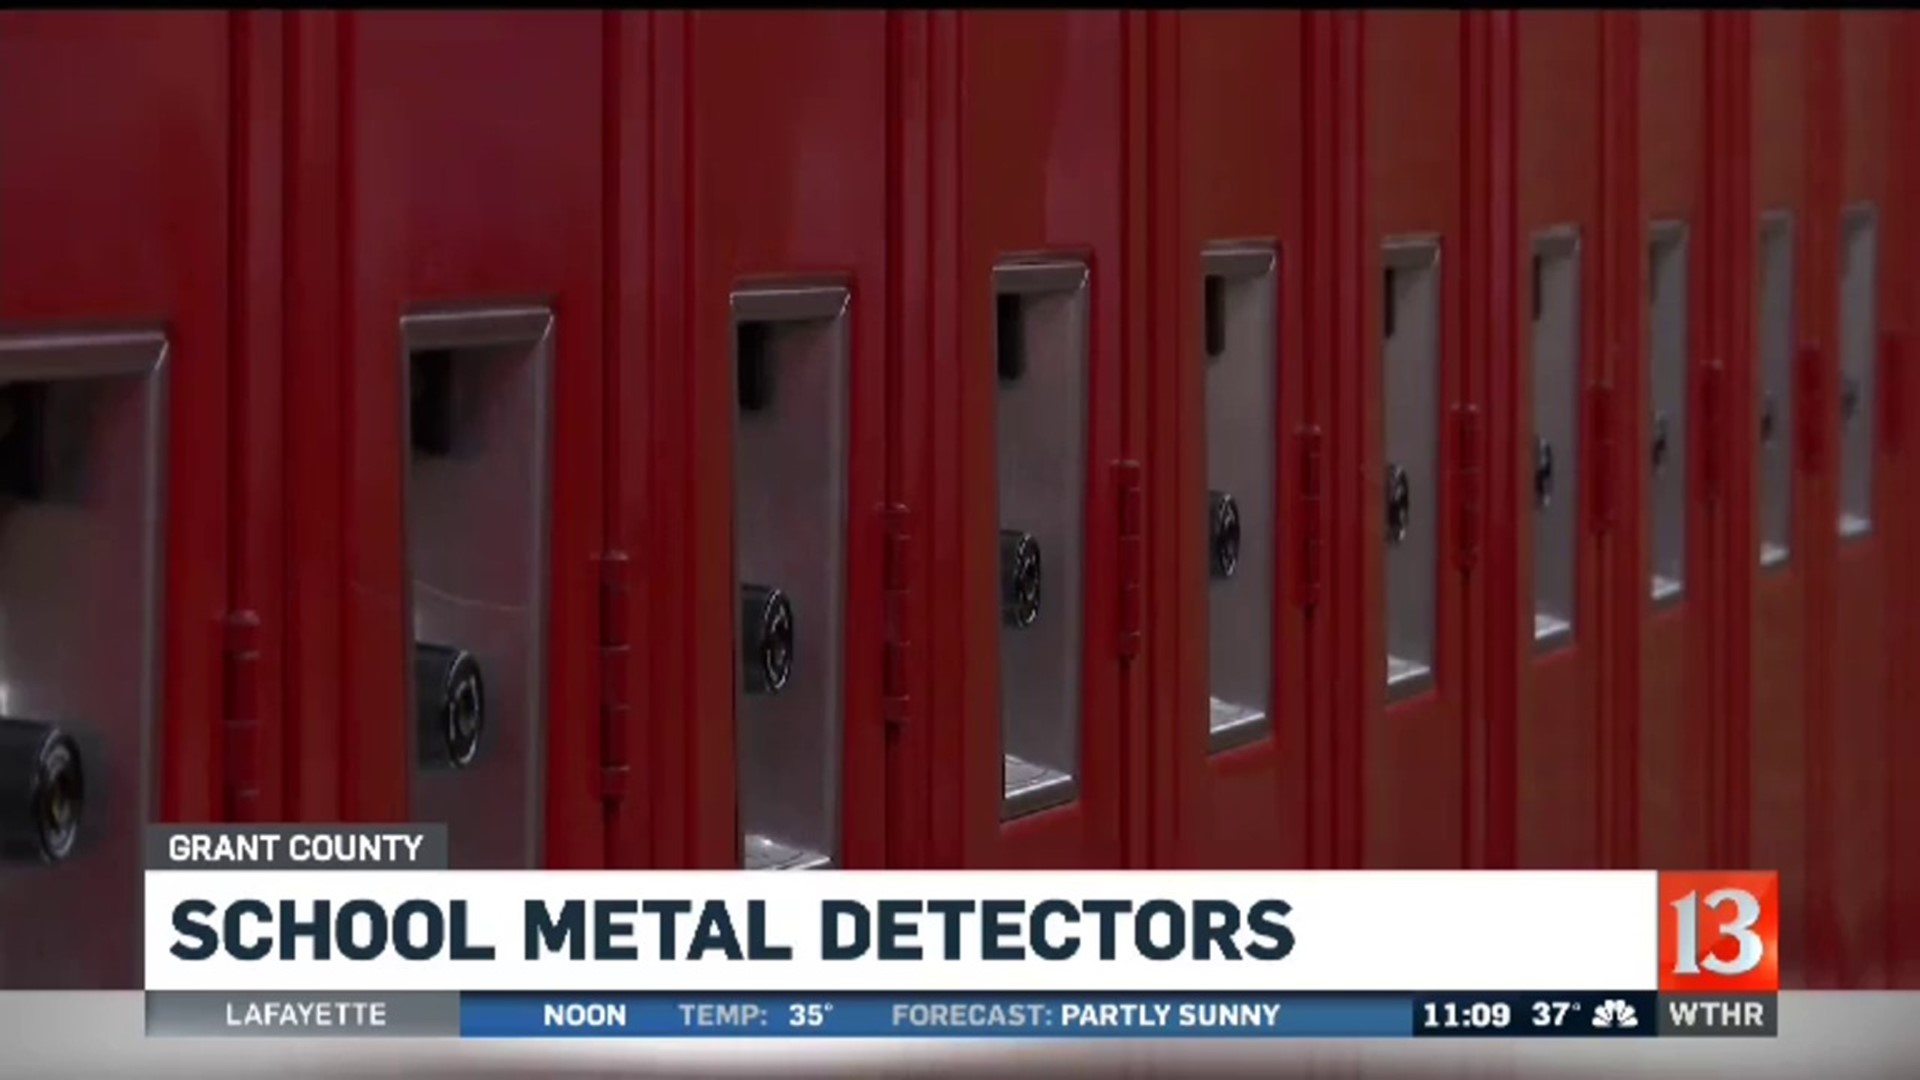 Schools in Grant County getting Metal Detectors